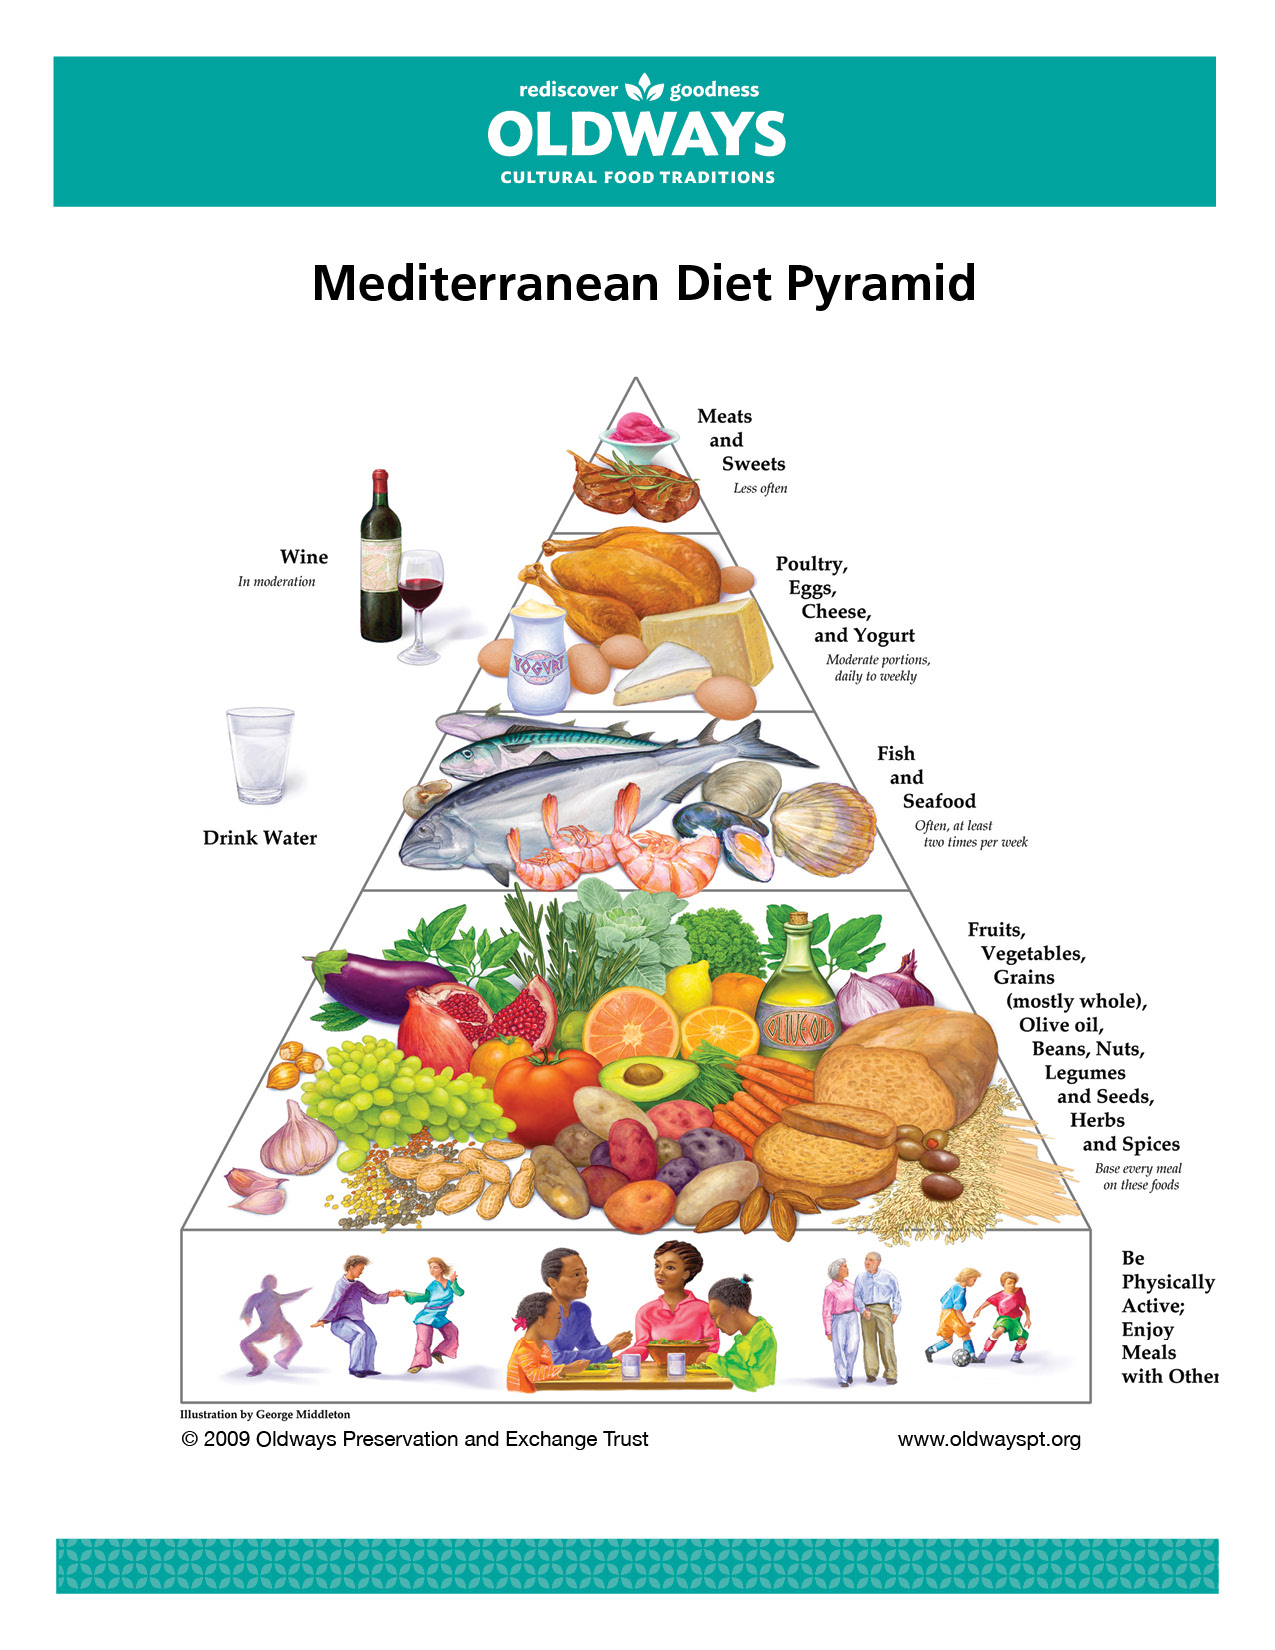 ikarian diet blue zone food pyramid